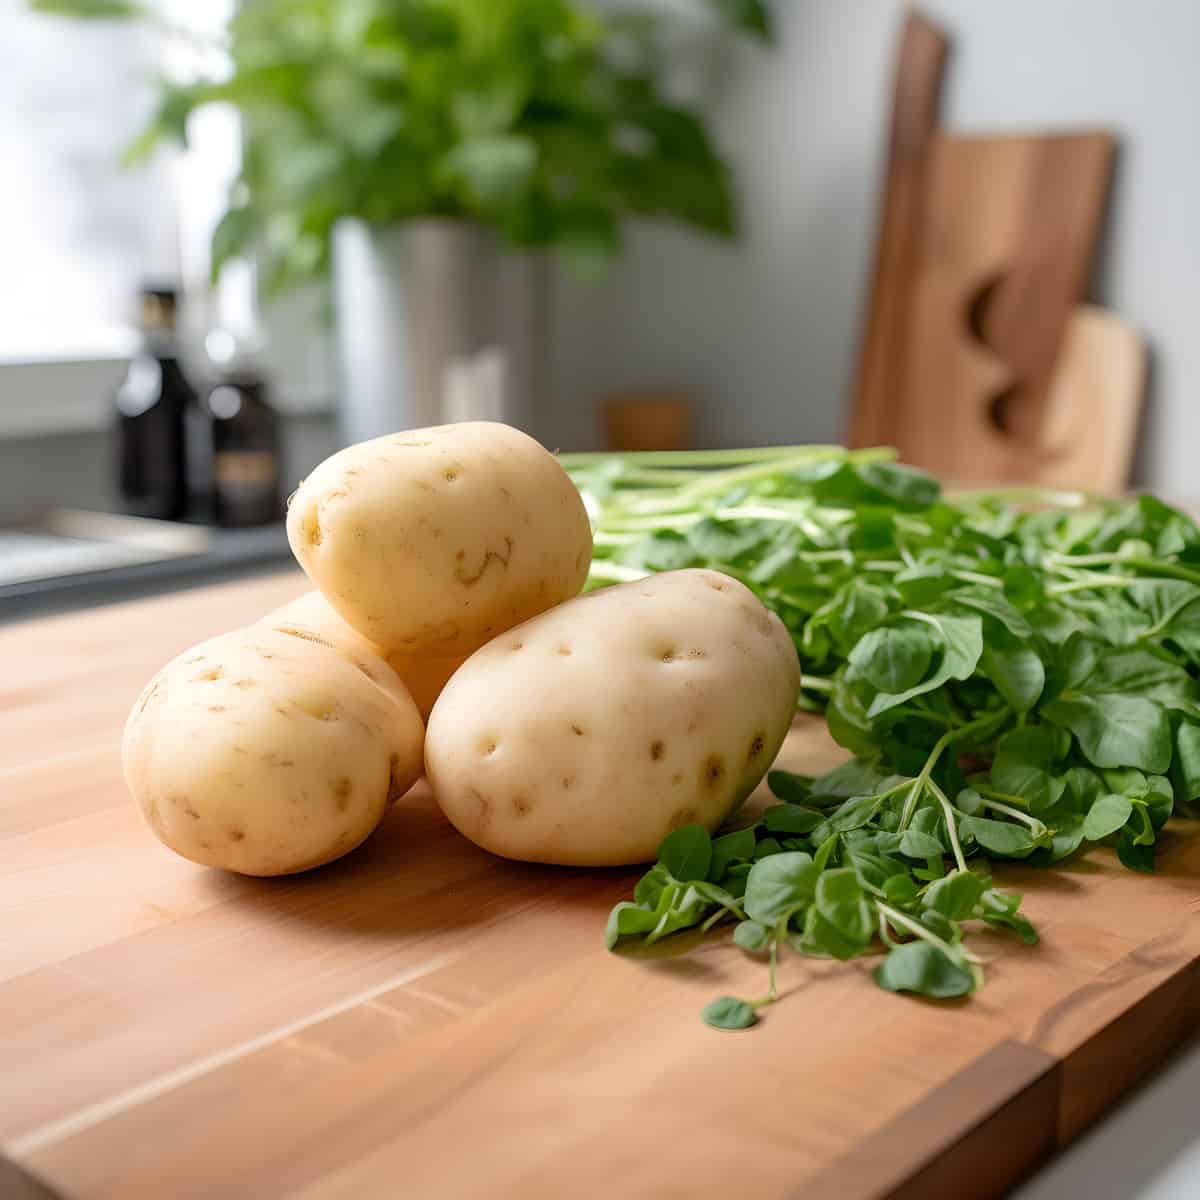 Irish White Potatoes on a kitchen counter